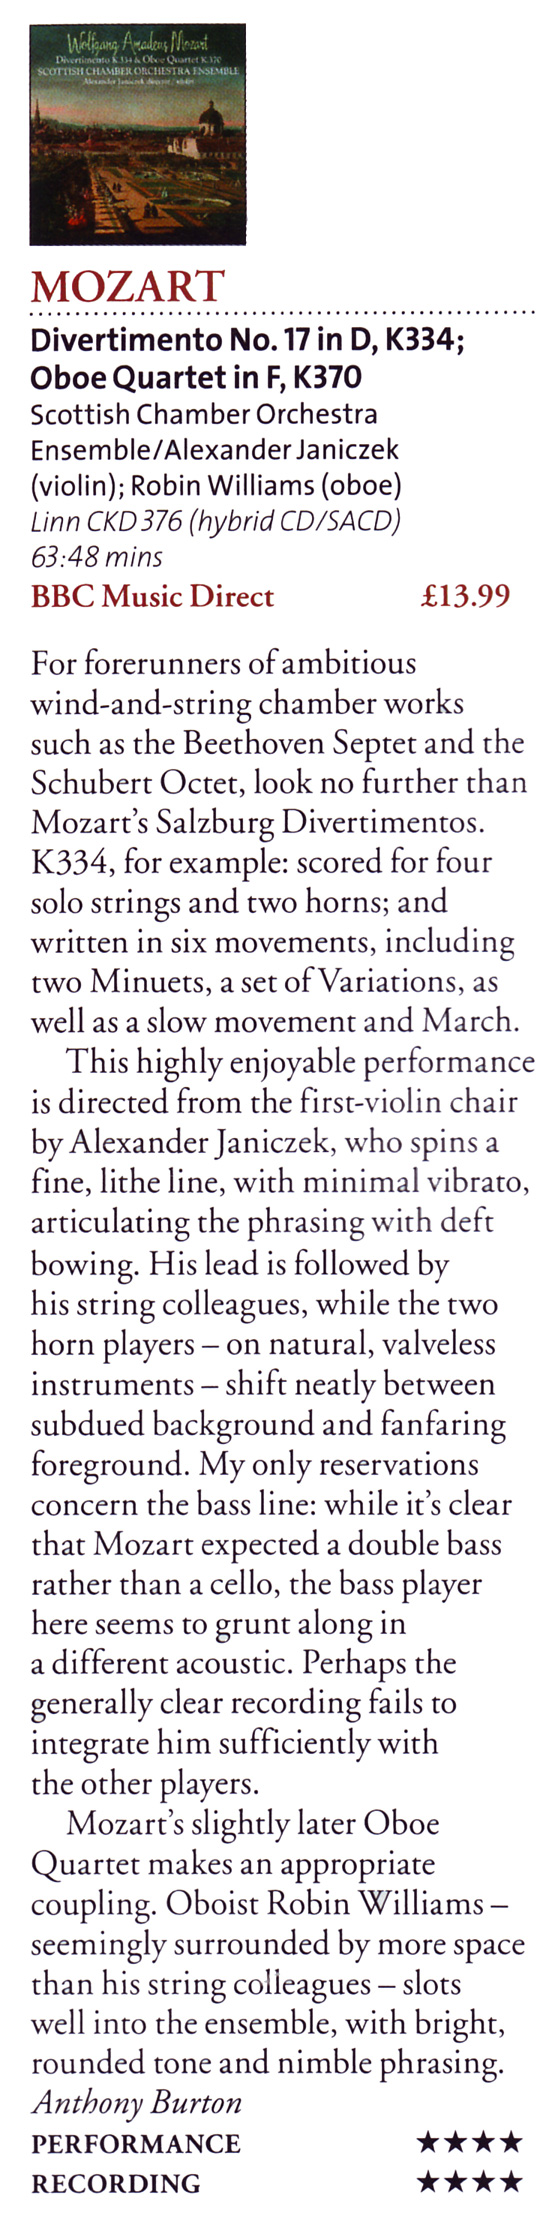 CKD 376 BBC Music Magazine Review